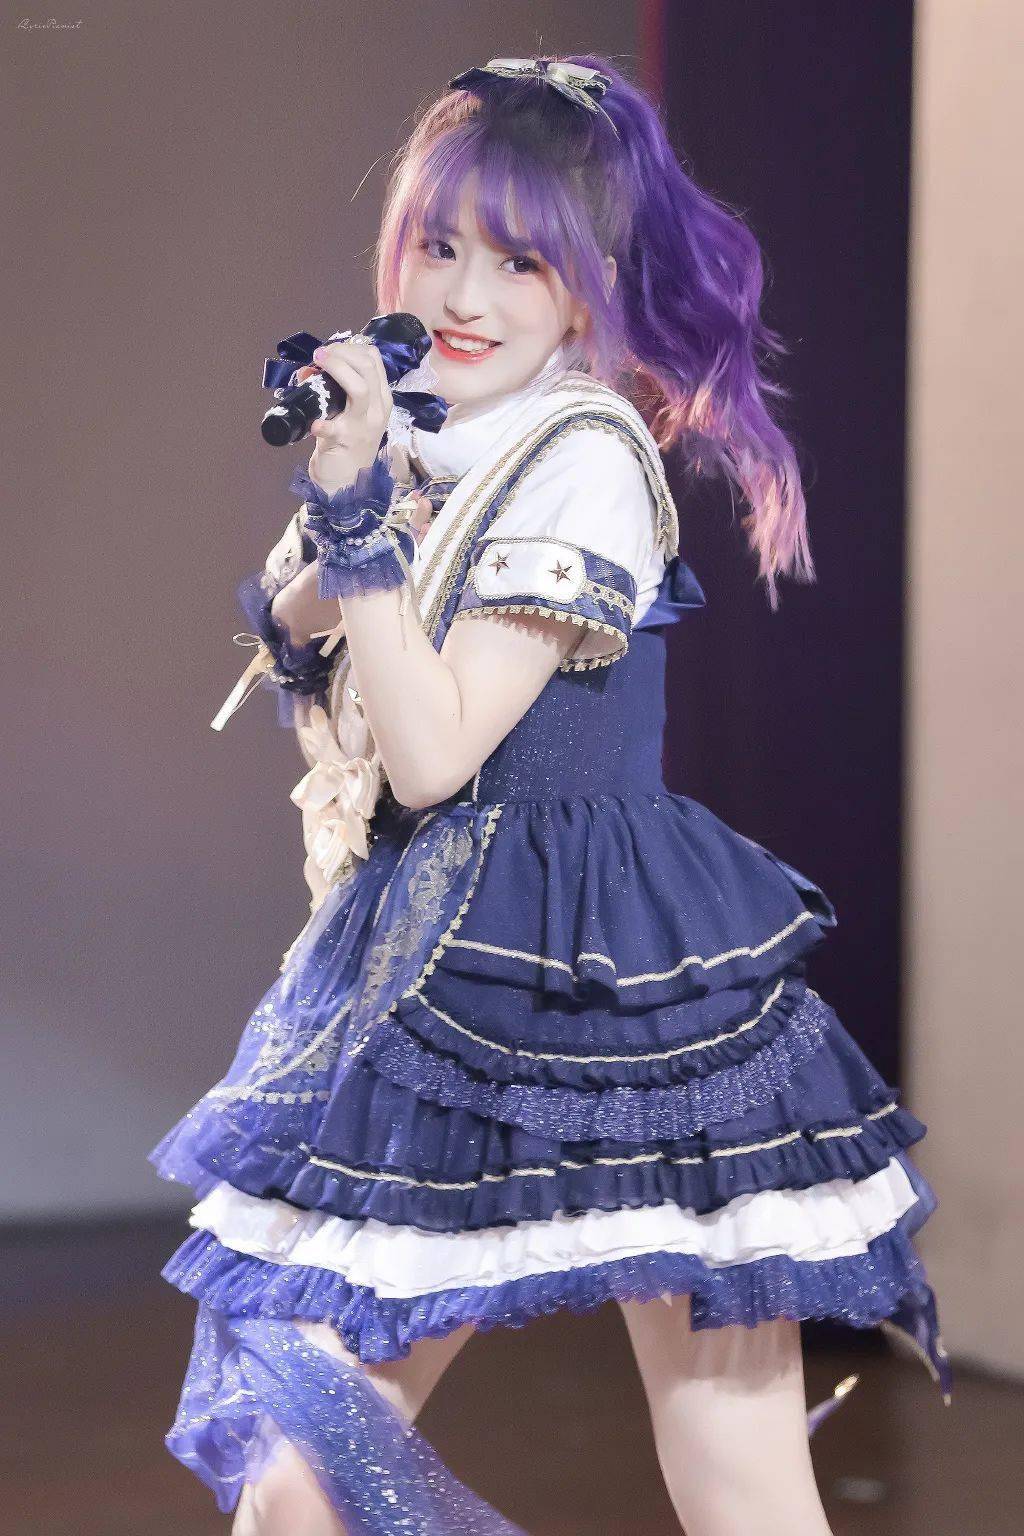 snh48林舒晴舞台上的紫发配合着动感的节奏,舞动出灵气.